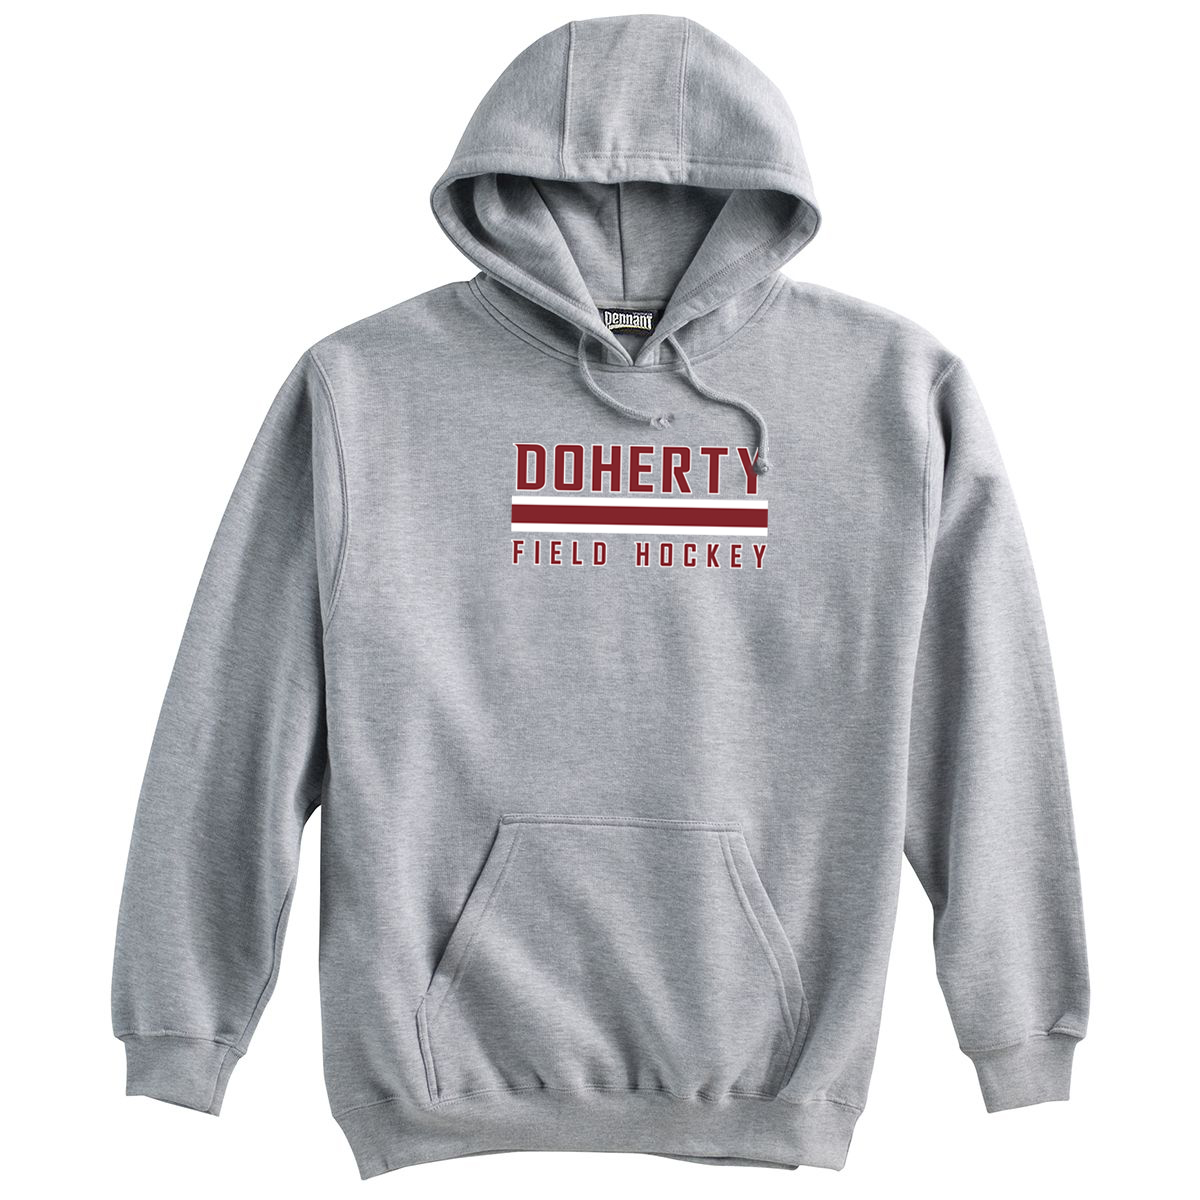 Doherty Field Hockey Sweatshirt